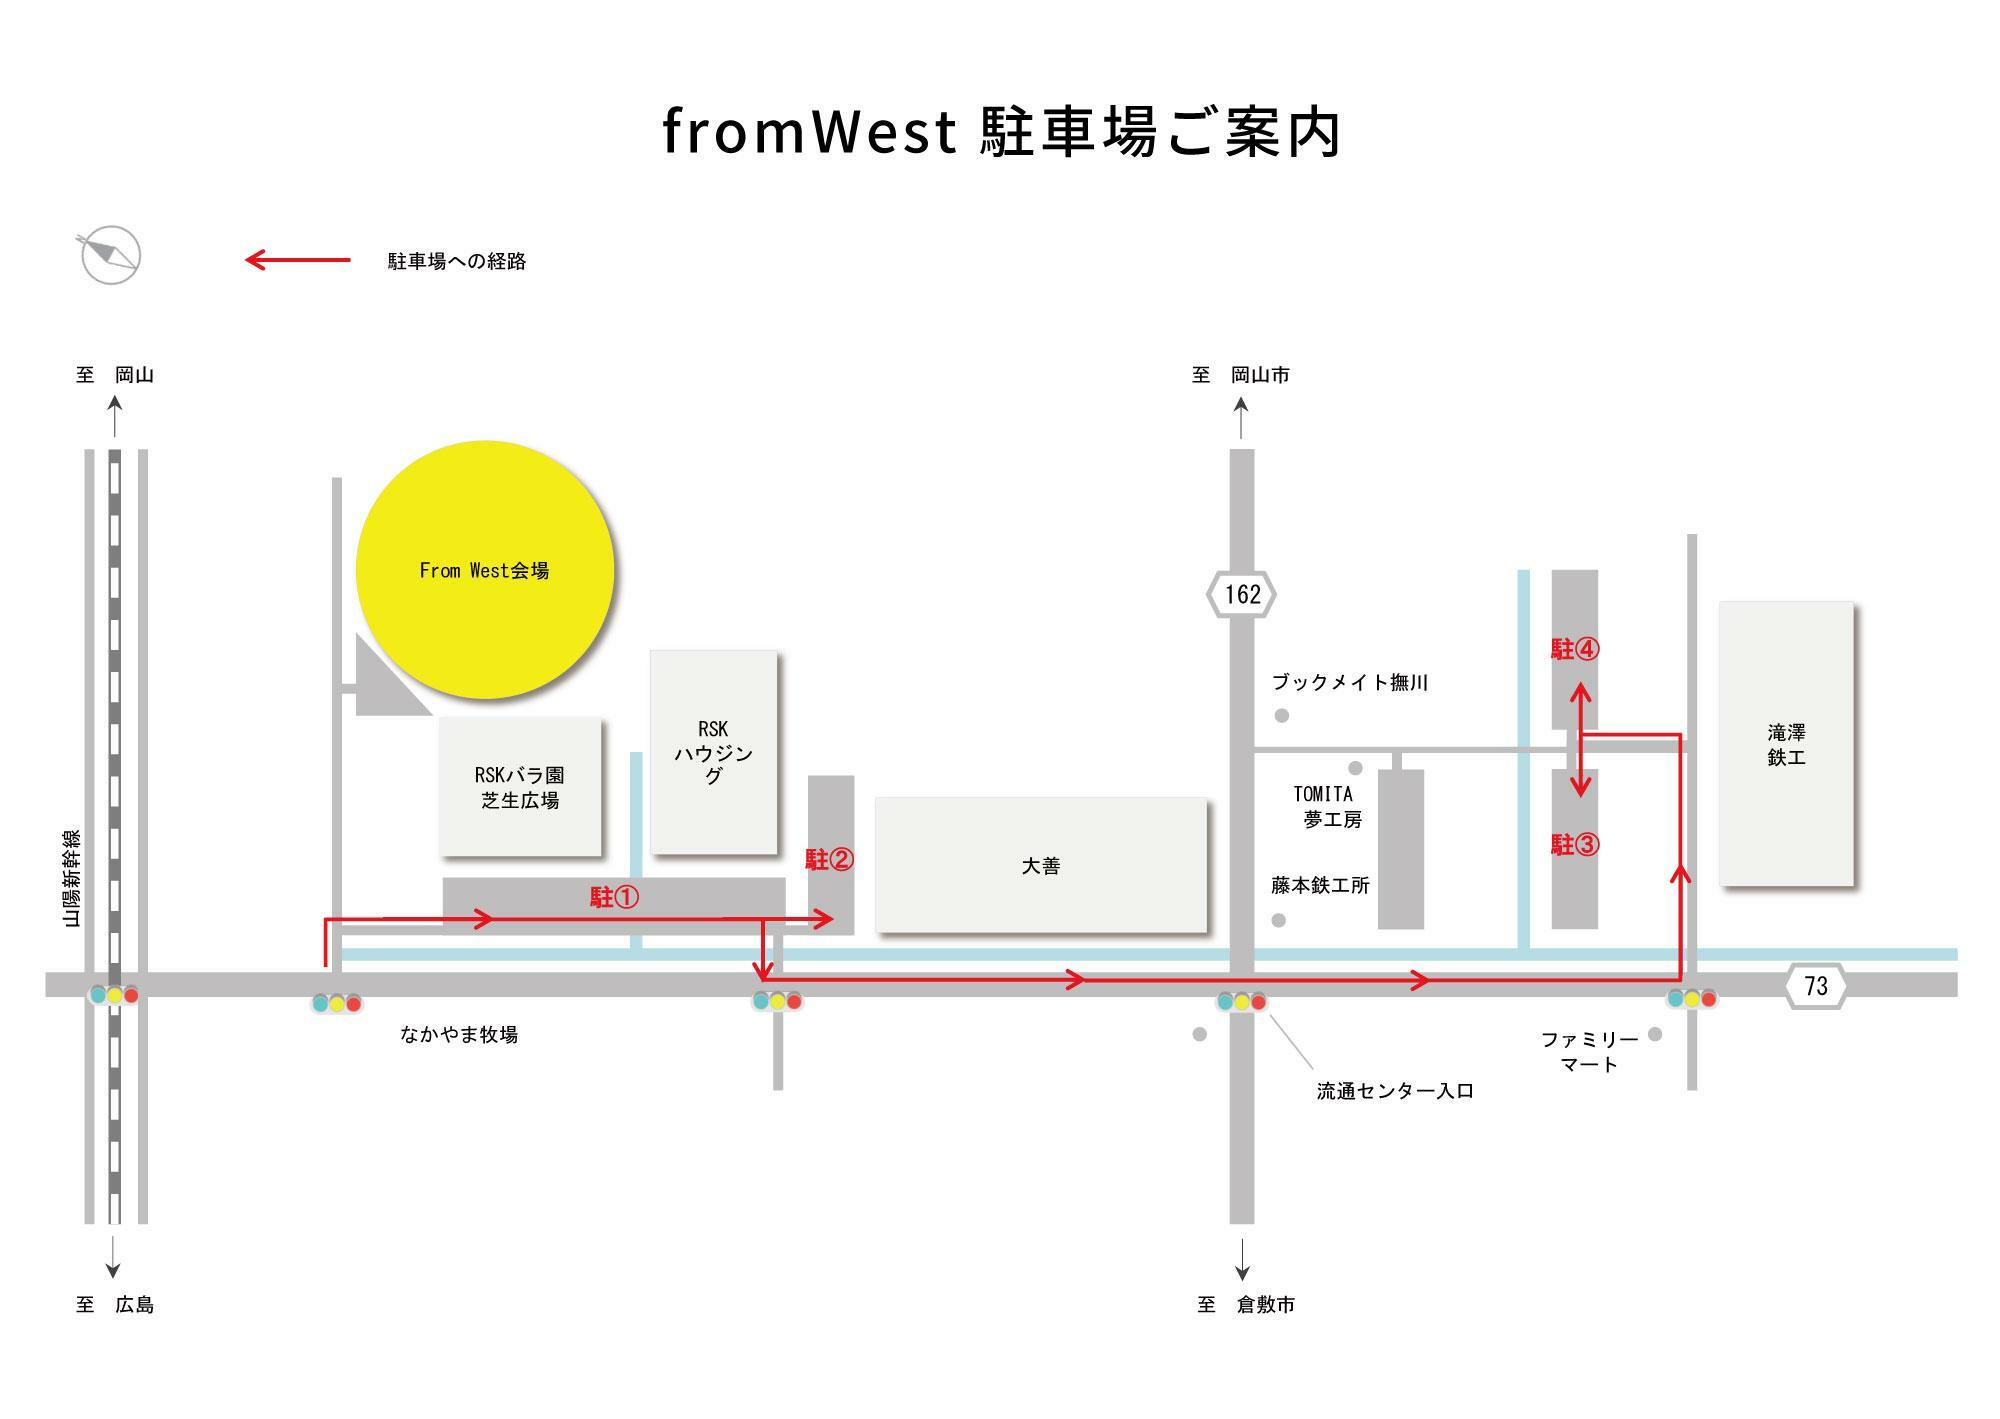 RSKバラ園の無料駐車場へは、新幹線側の入り口から入ろう。RSKハウジング側は出口専用